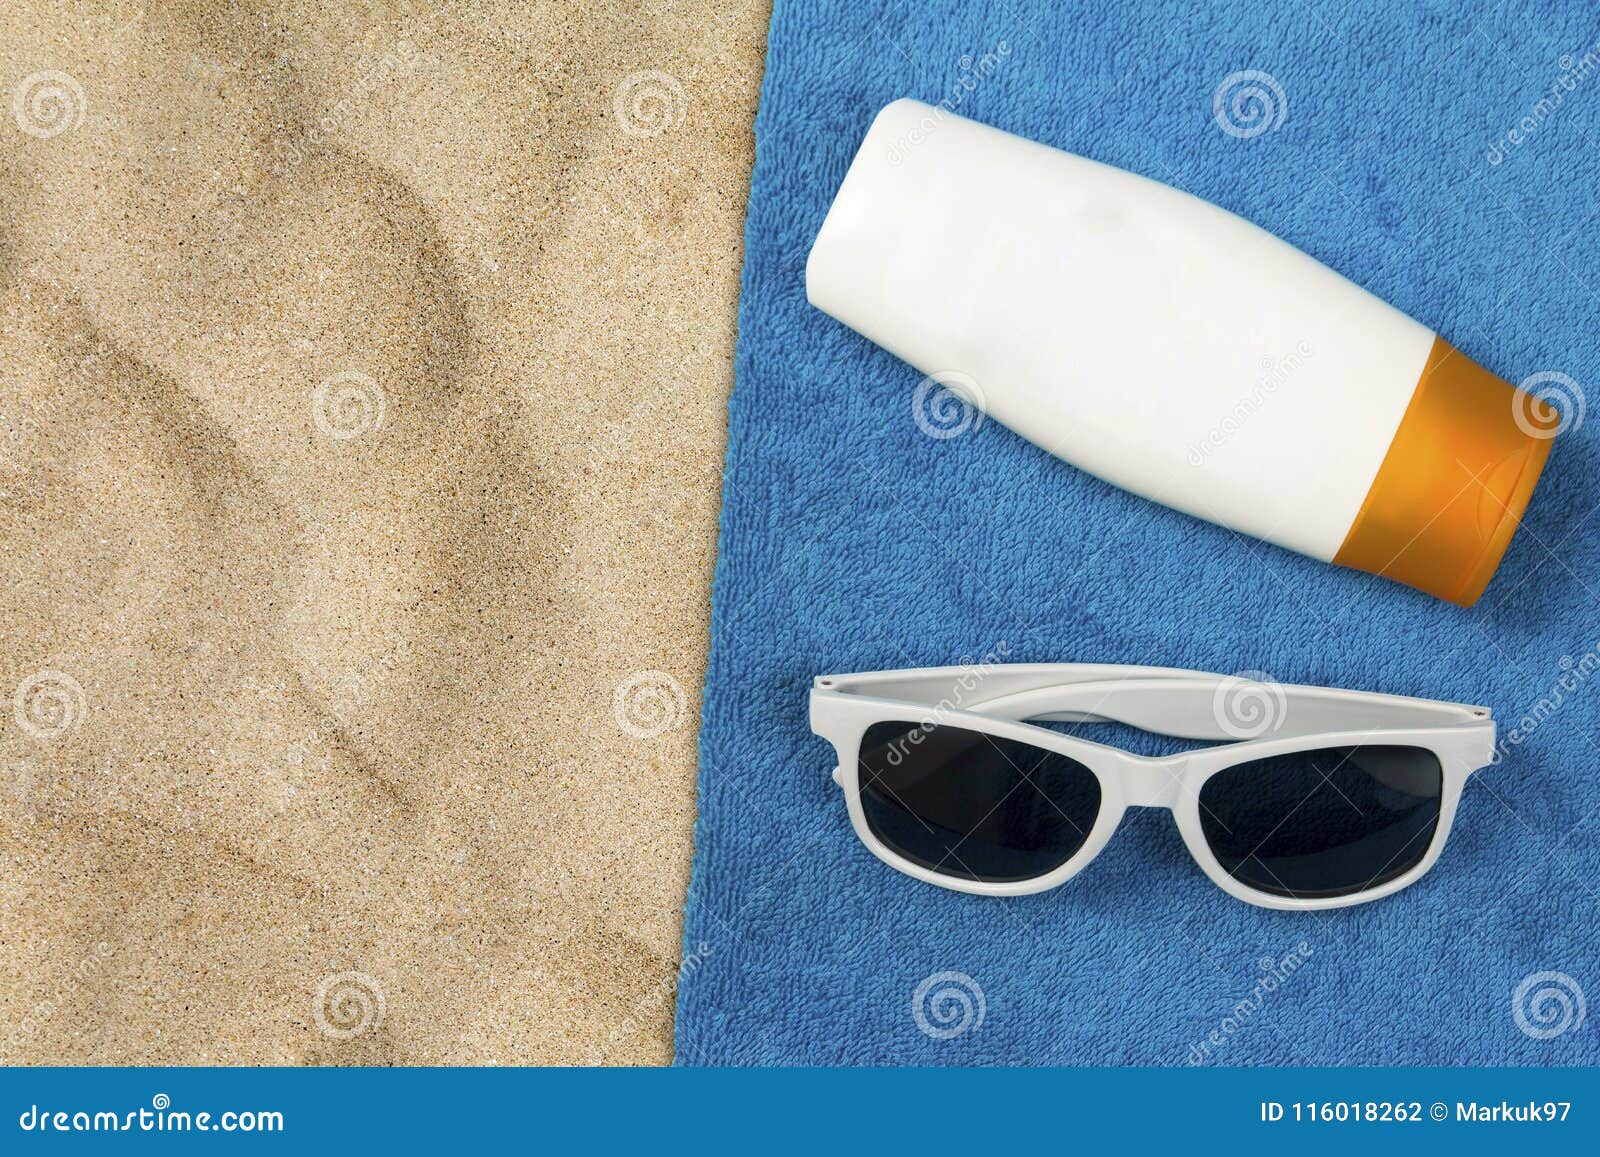 Towel on the Beach with Sunglasses and Sun Tan Cream Stock Photo ...